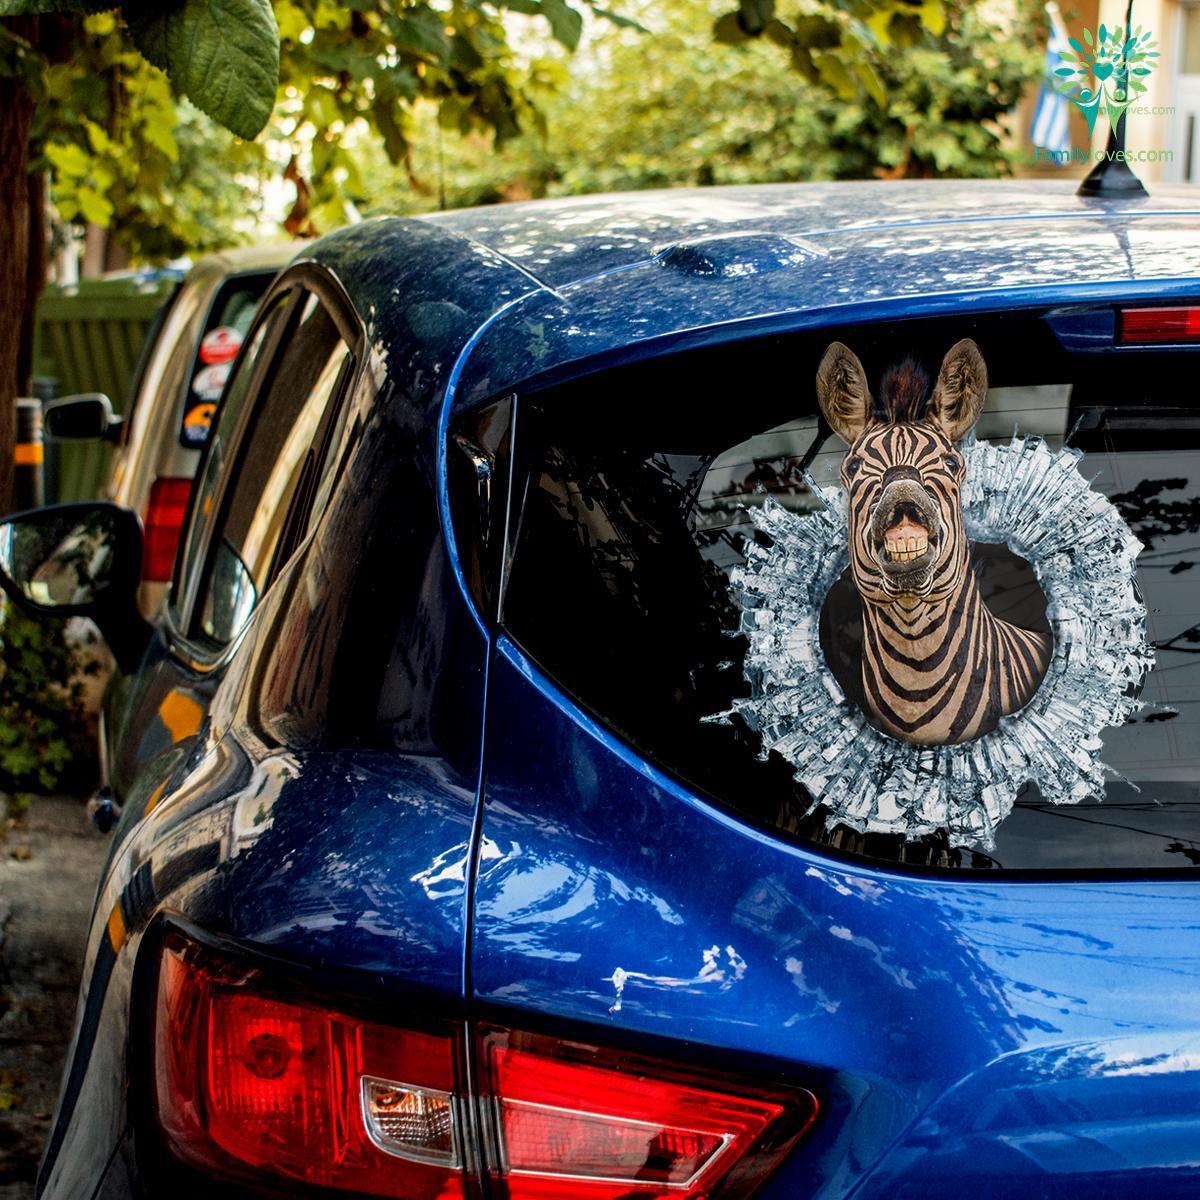 Zebra Smile Car Decal And Broken Car Window Sticker Car Window Decals Familyloves Com